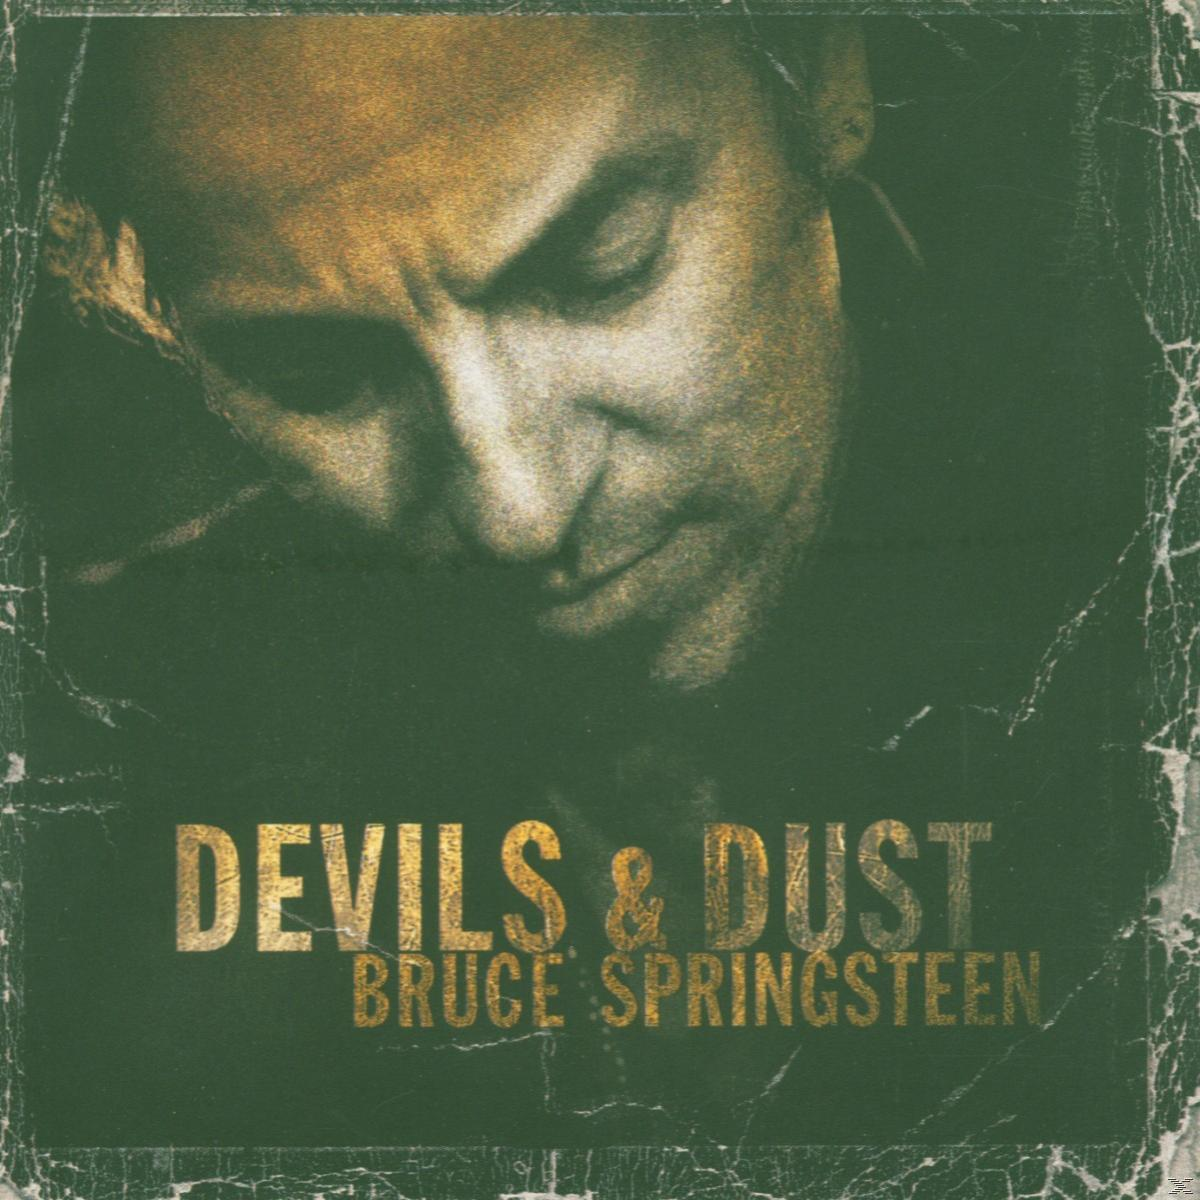 Devils - - (CD DVD-Video-Single) Dust Bruce Springsteen + &